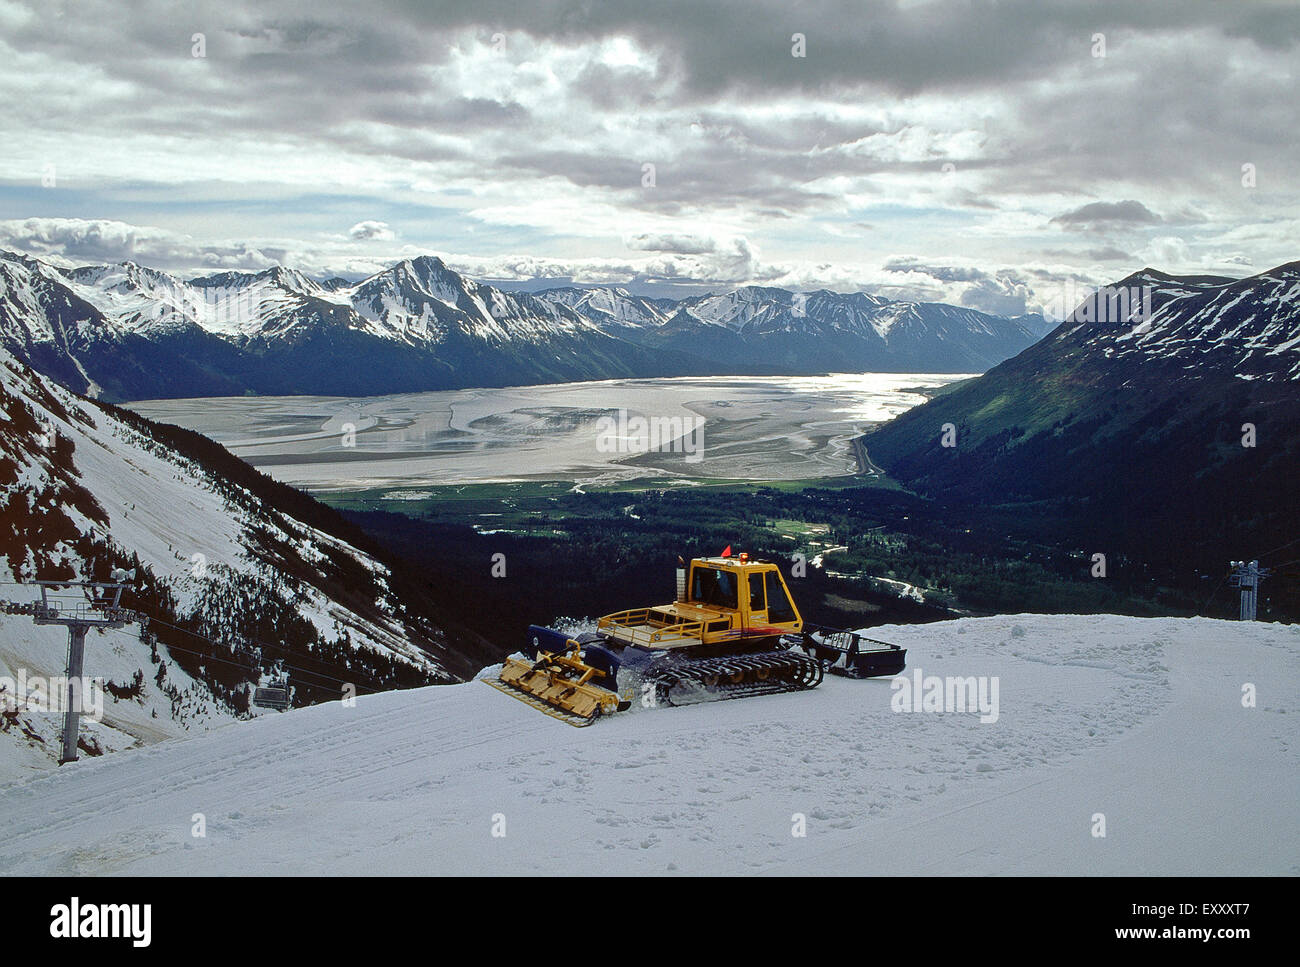 Snowcat grooming the slopes of Alyeska Resort,Alaska Stock Photo